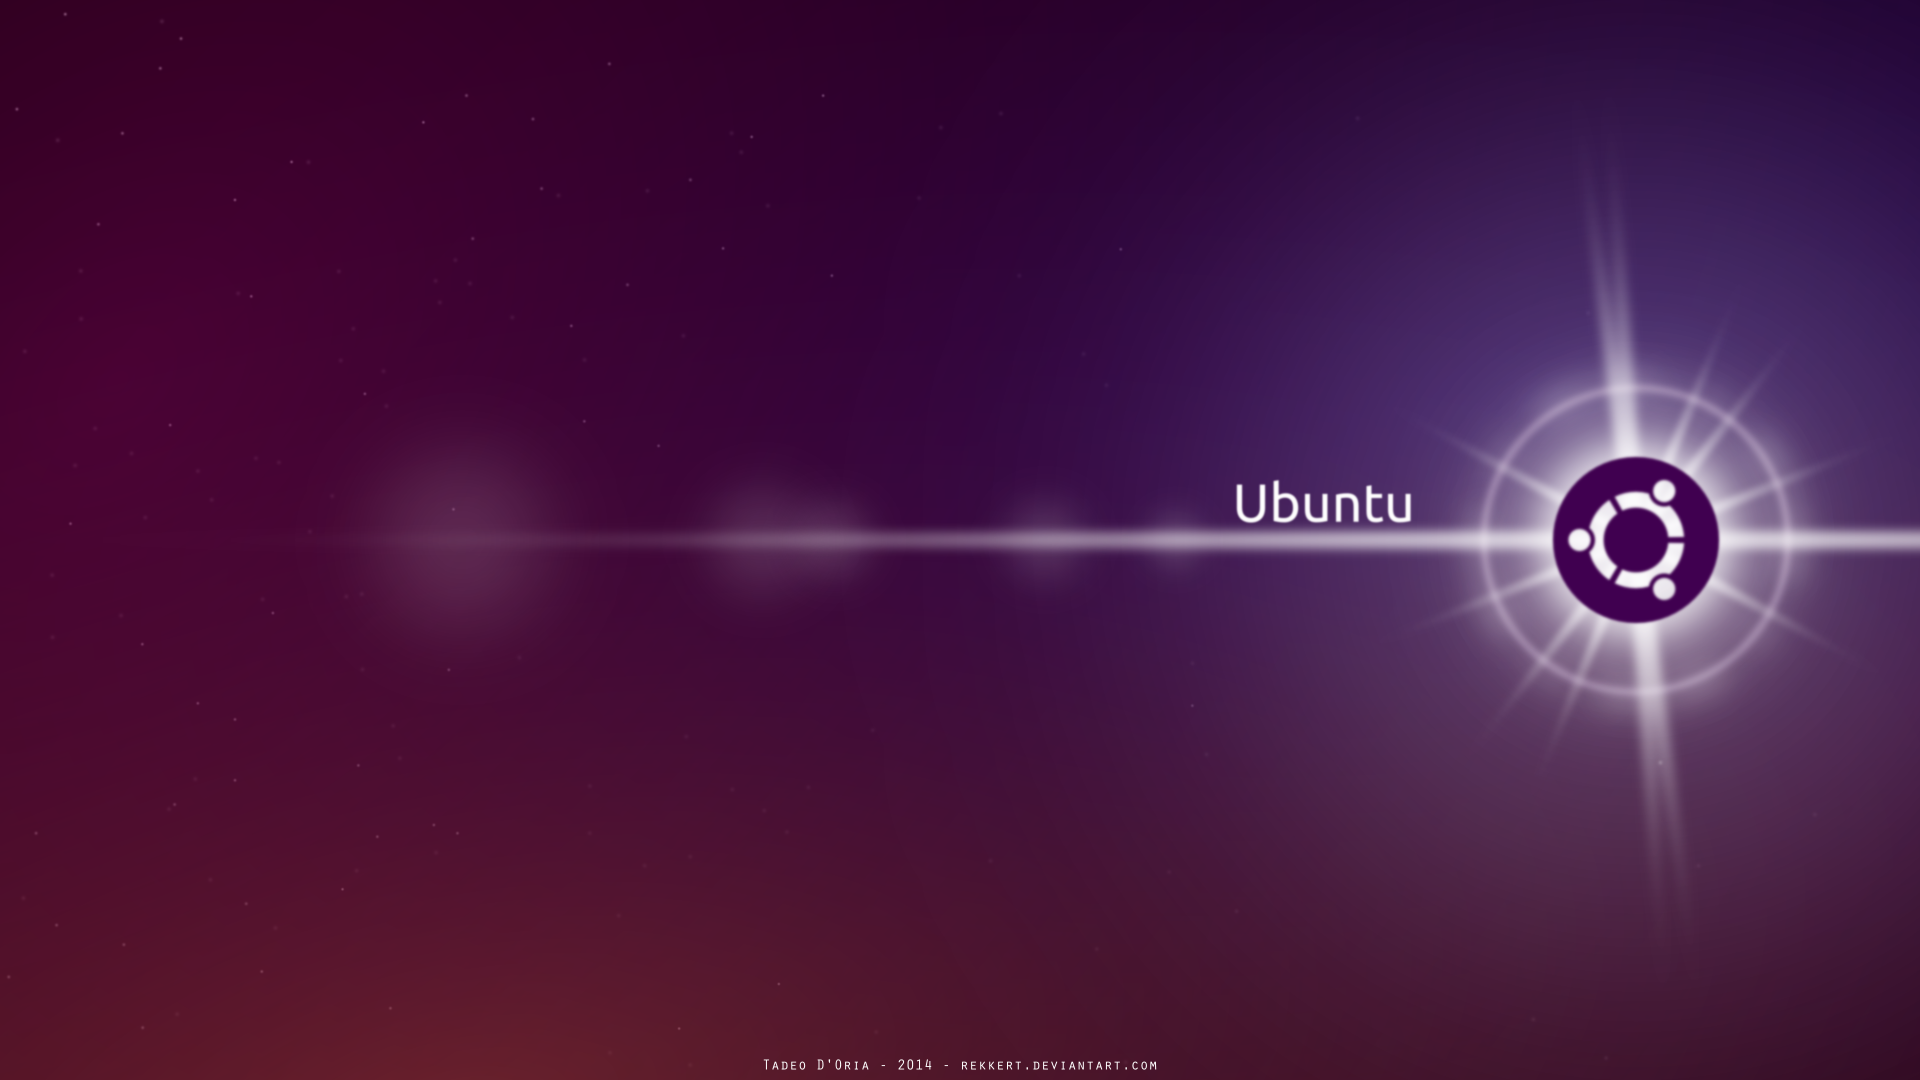 Ubuntu Wallpaper HDwpro